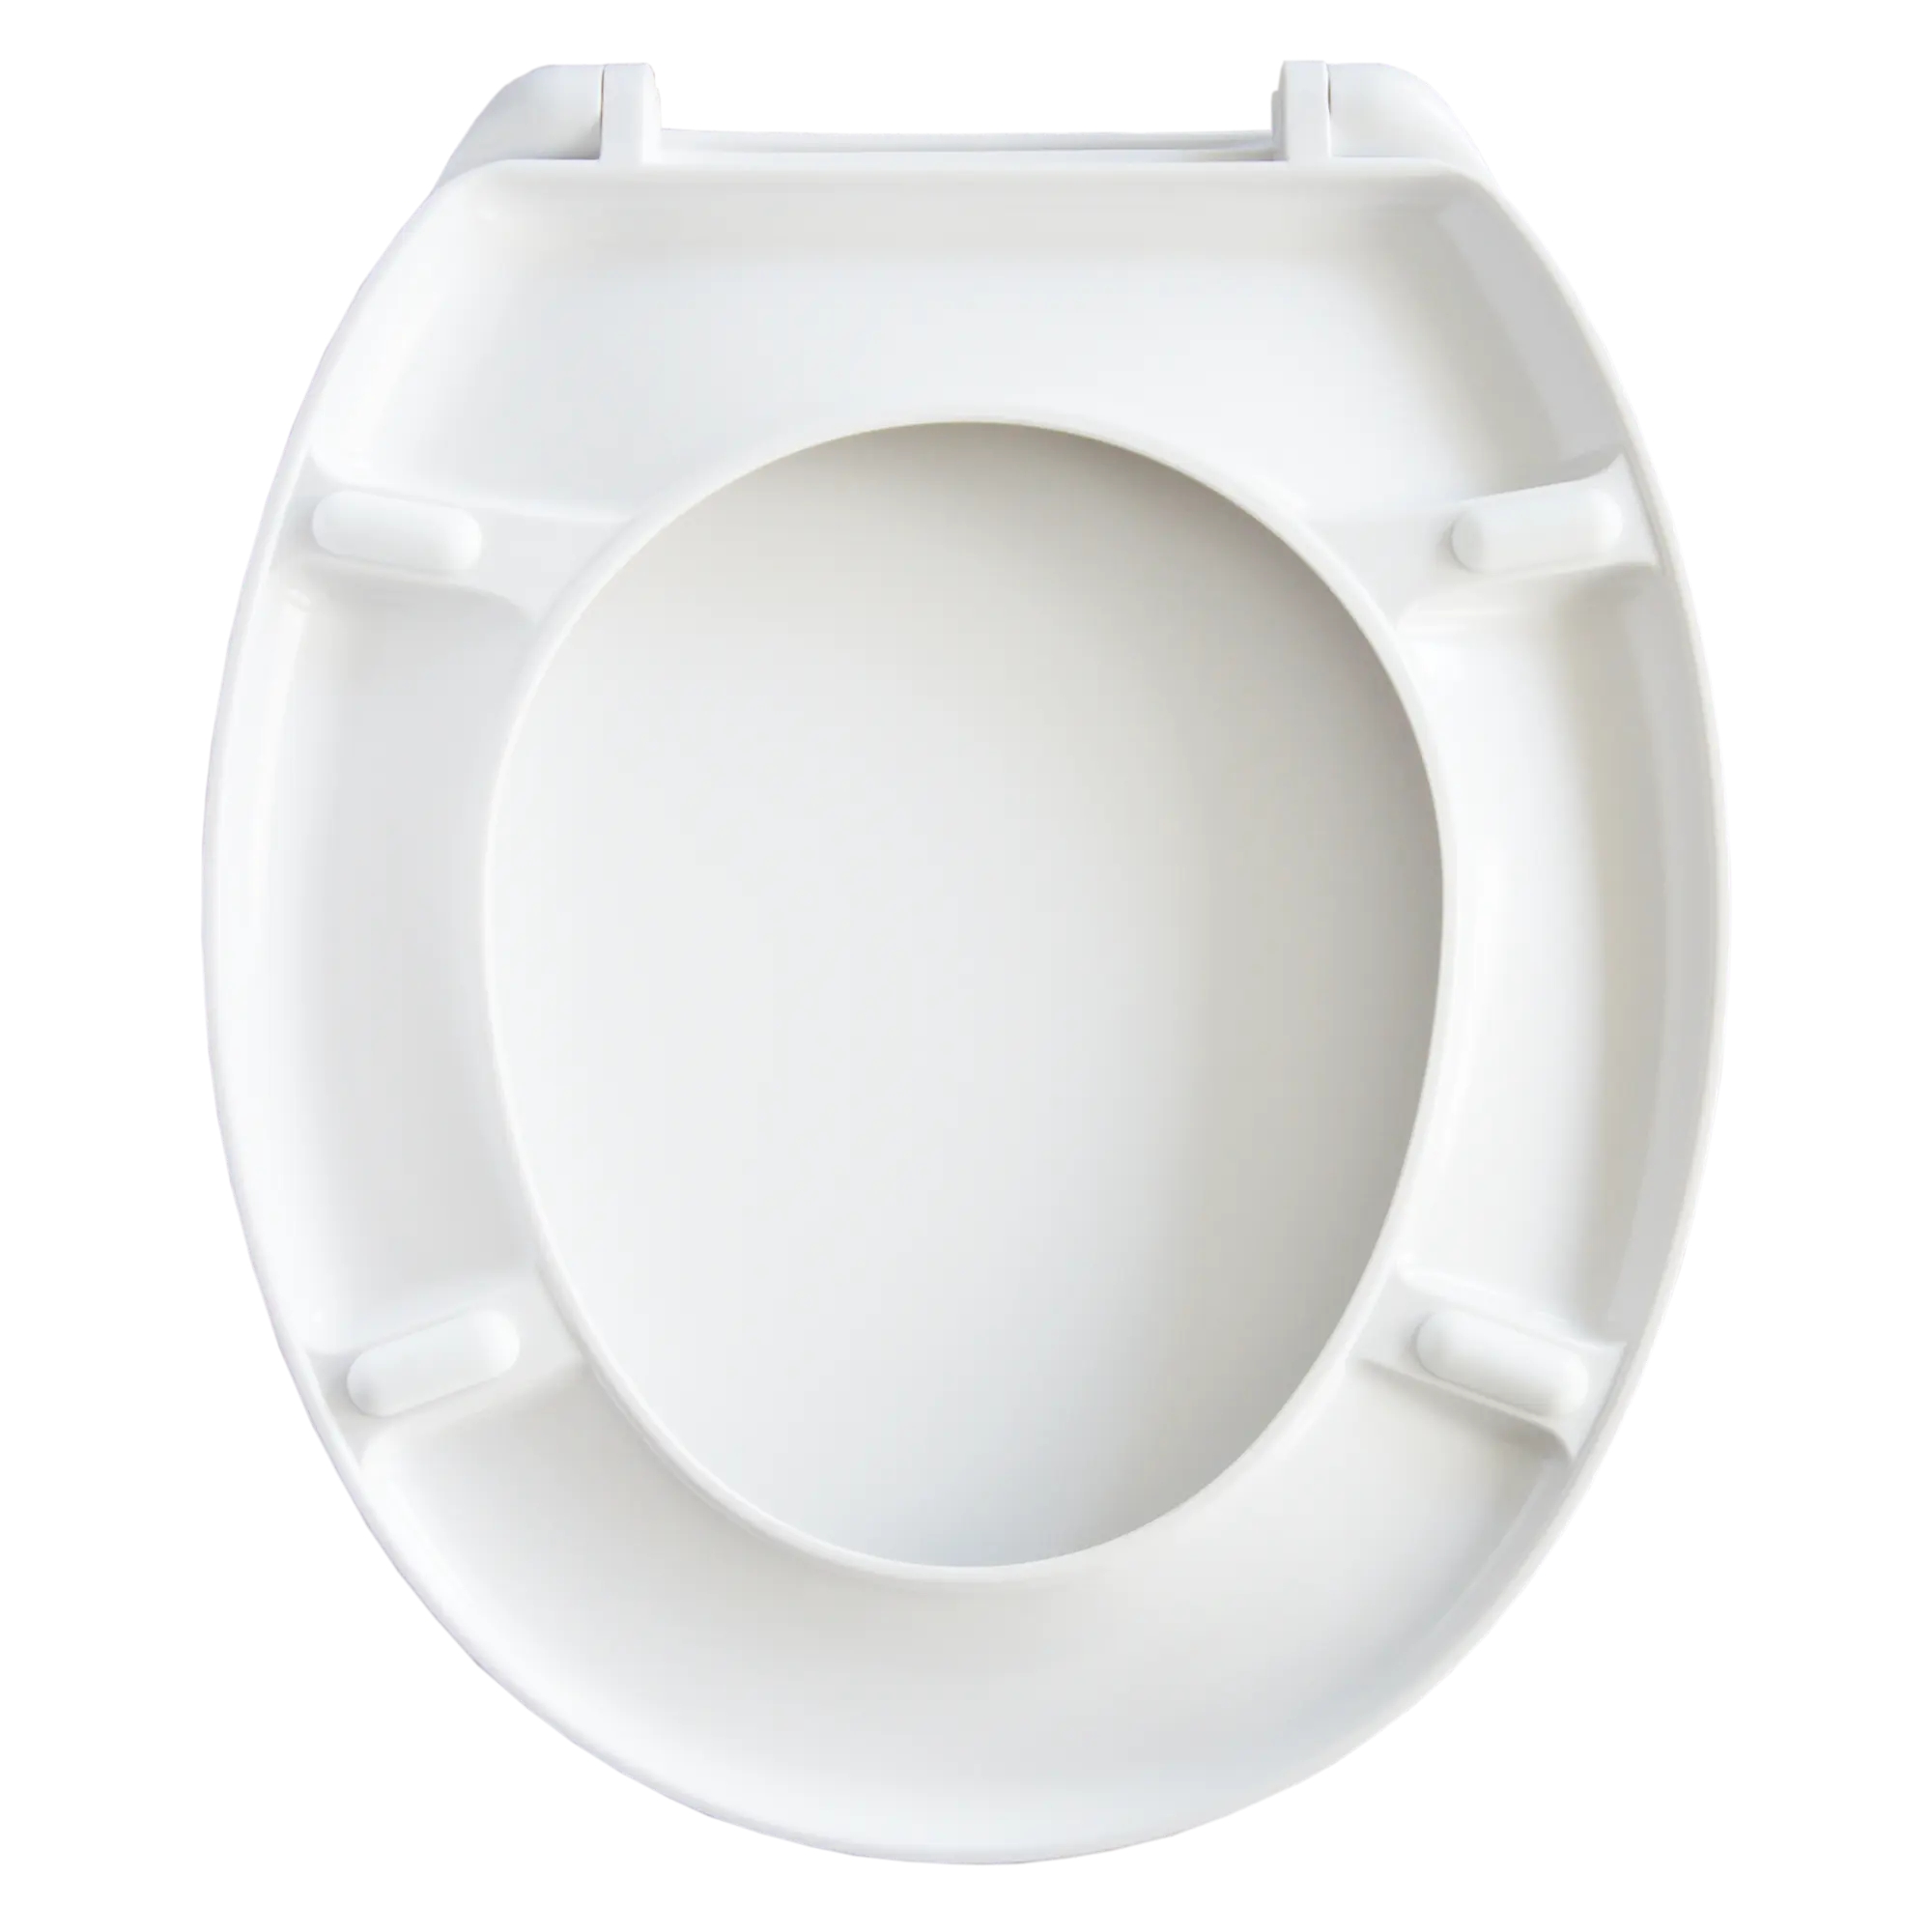 Copriwater ovale Universale Easy SENSEA duroplast bianco - 5